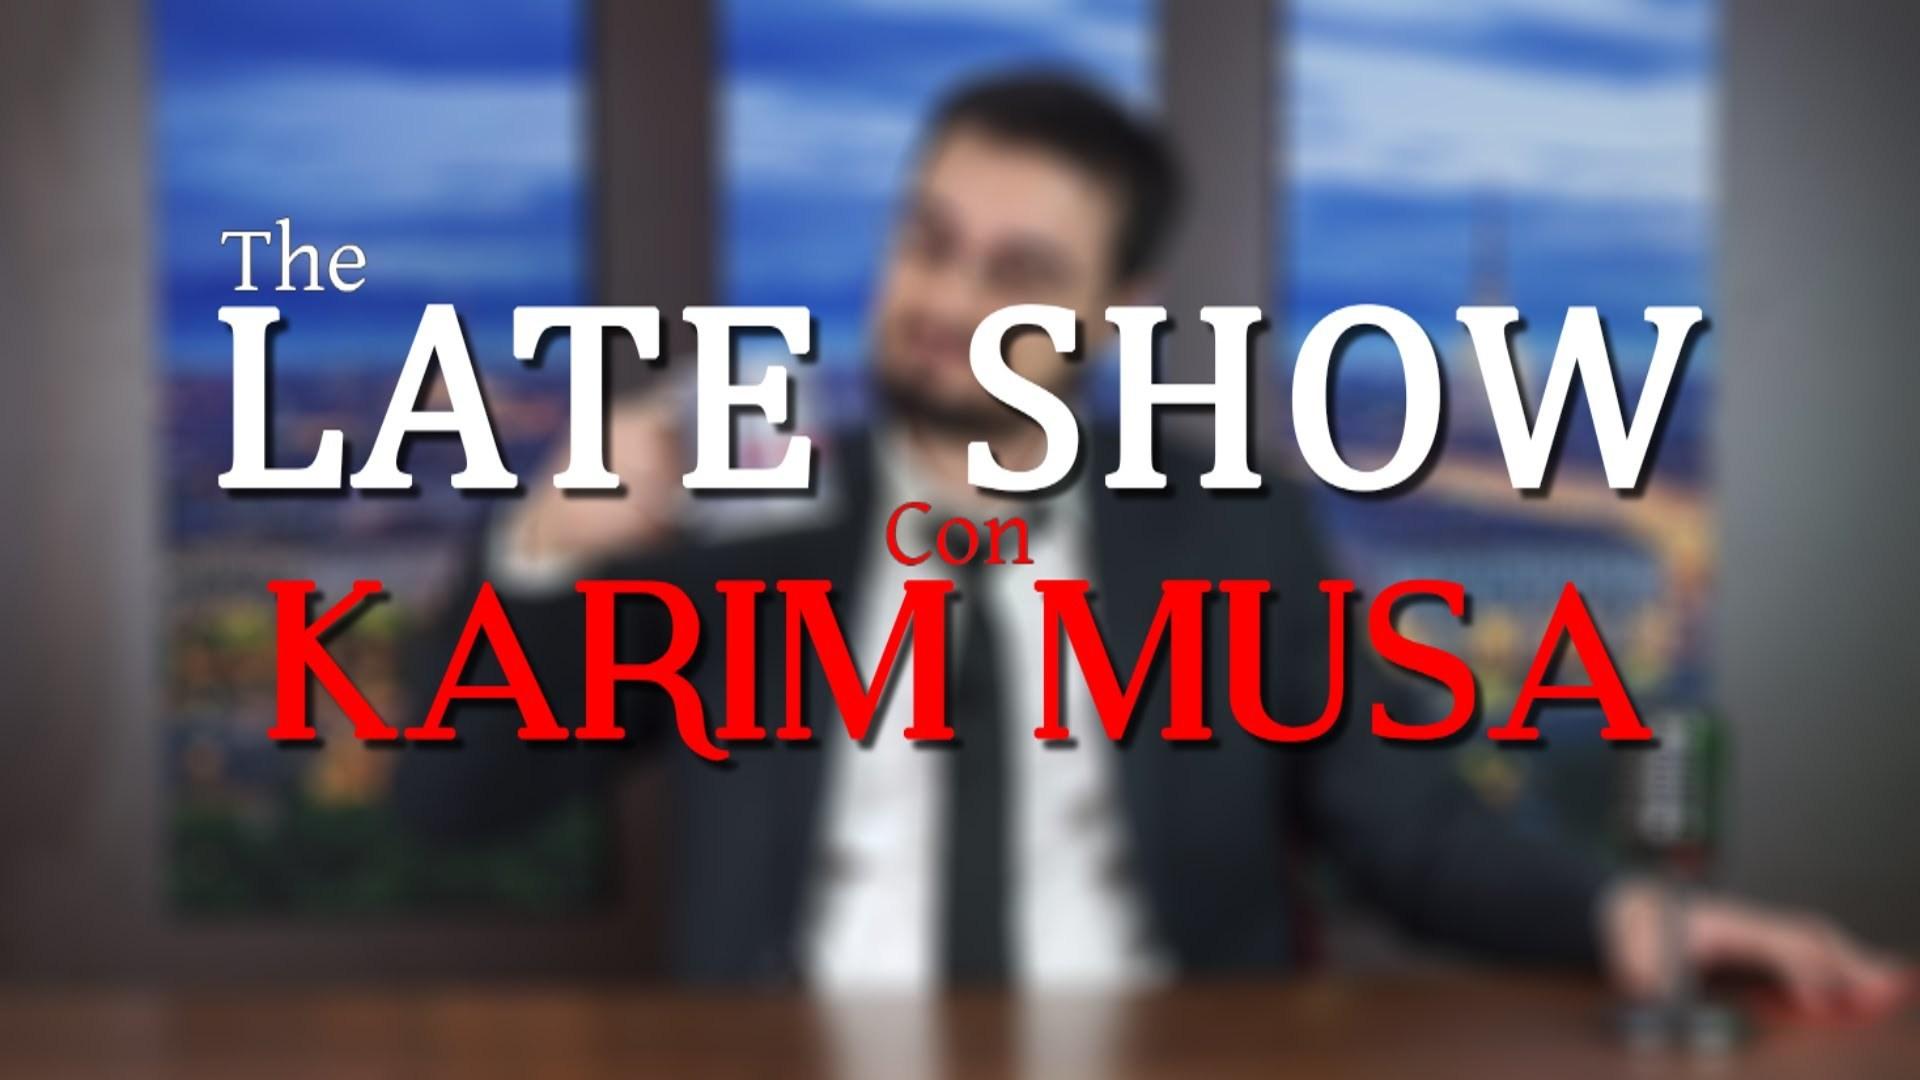 The Late Show con Karim Musa